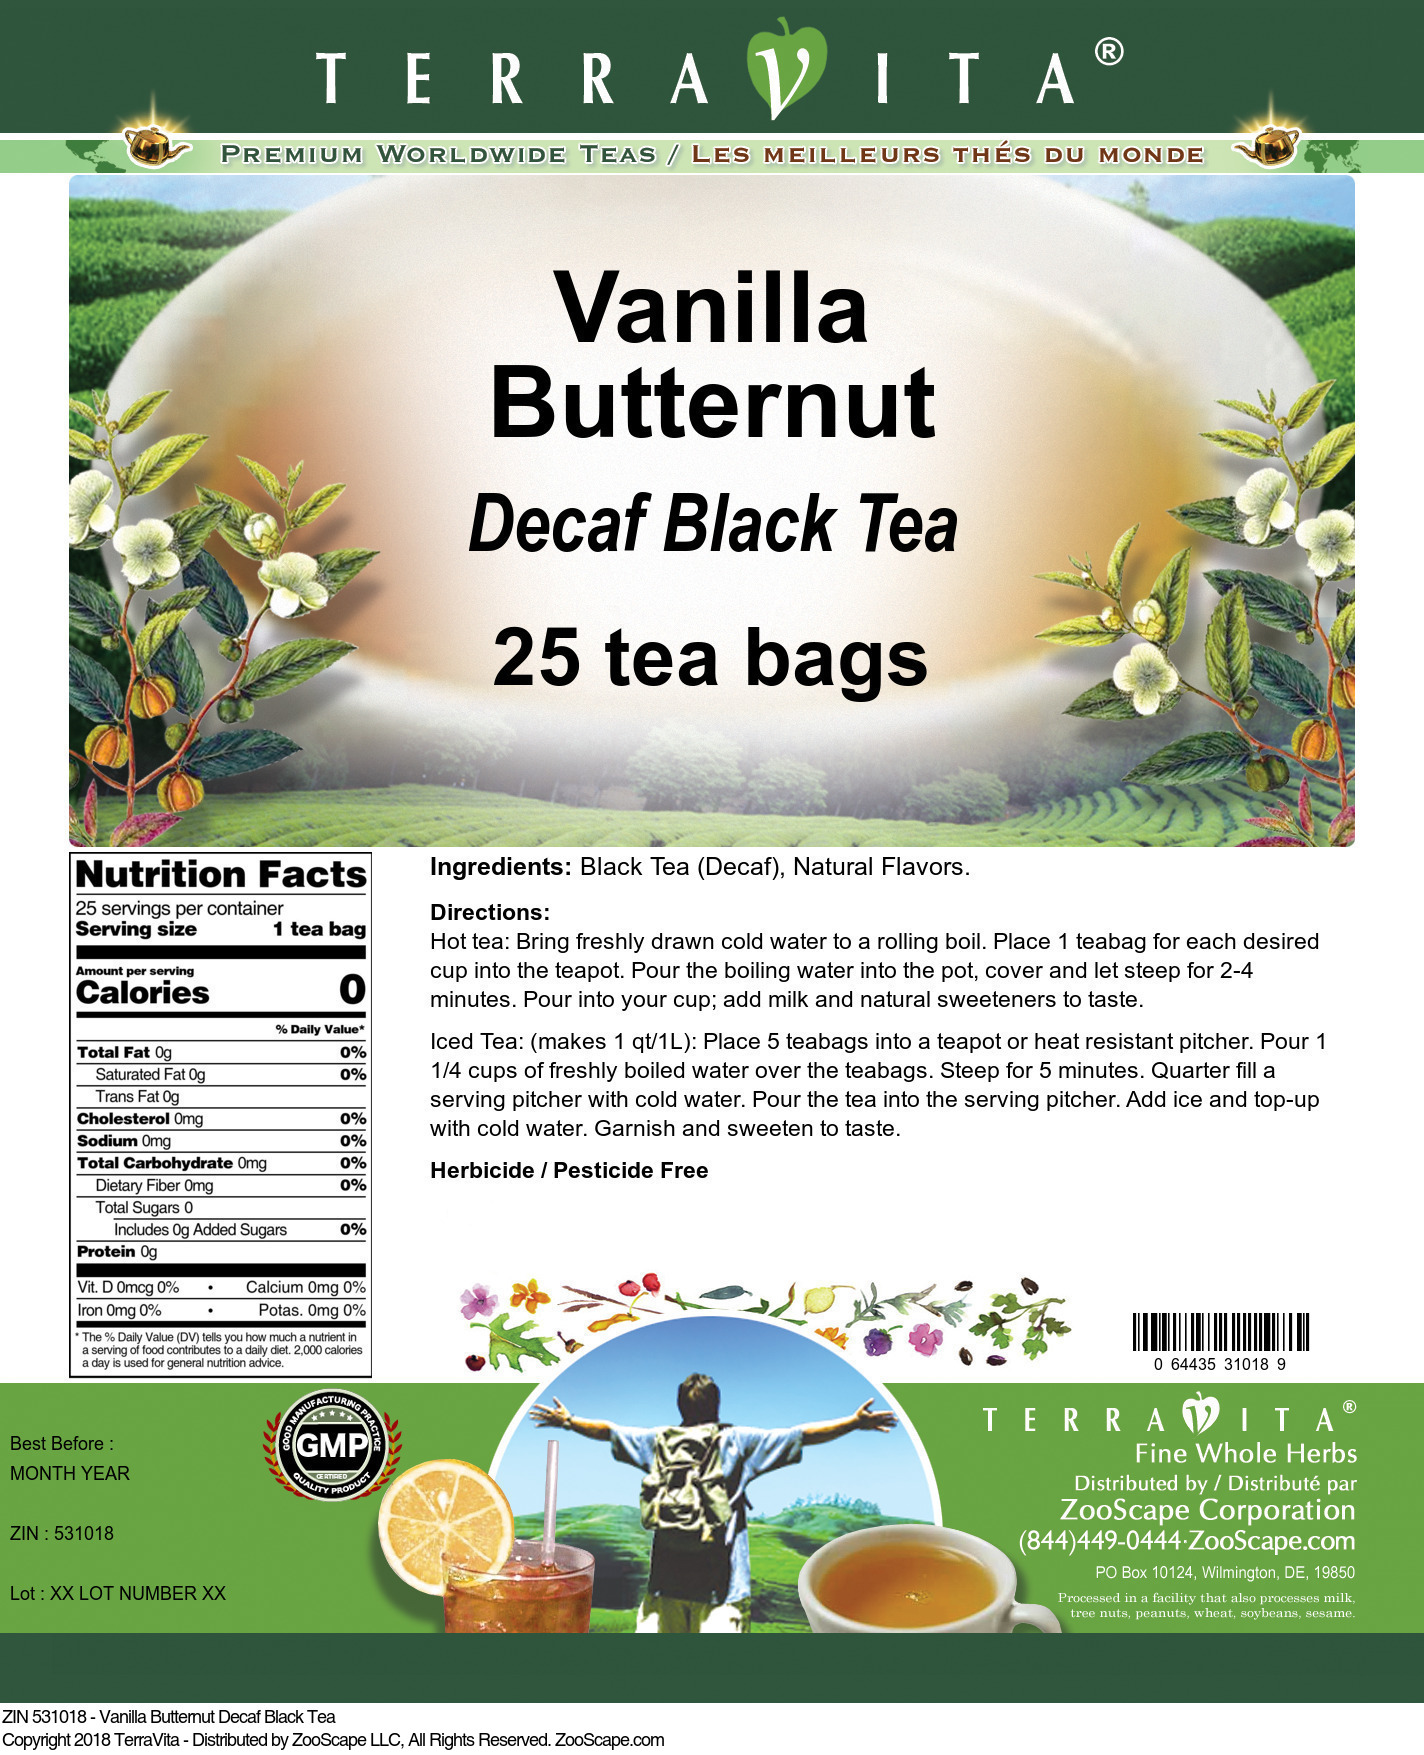 Vanilla Butternut Decaf Black Tea - Label